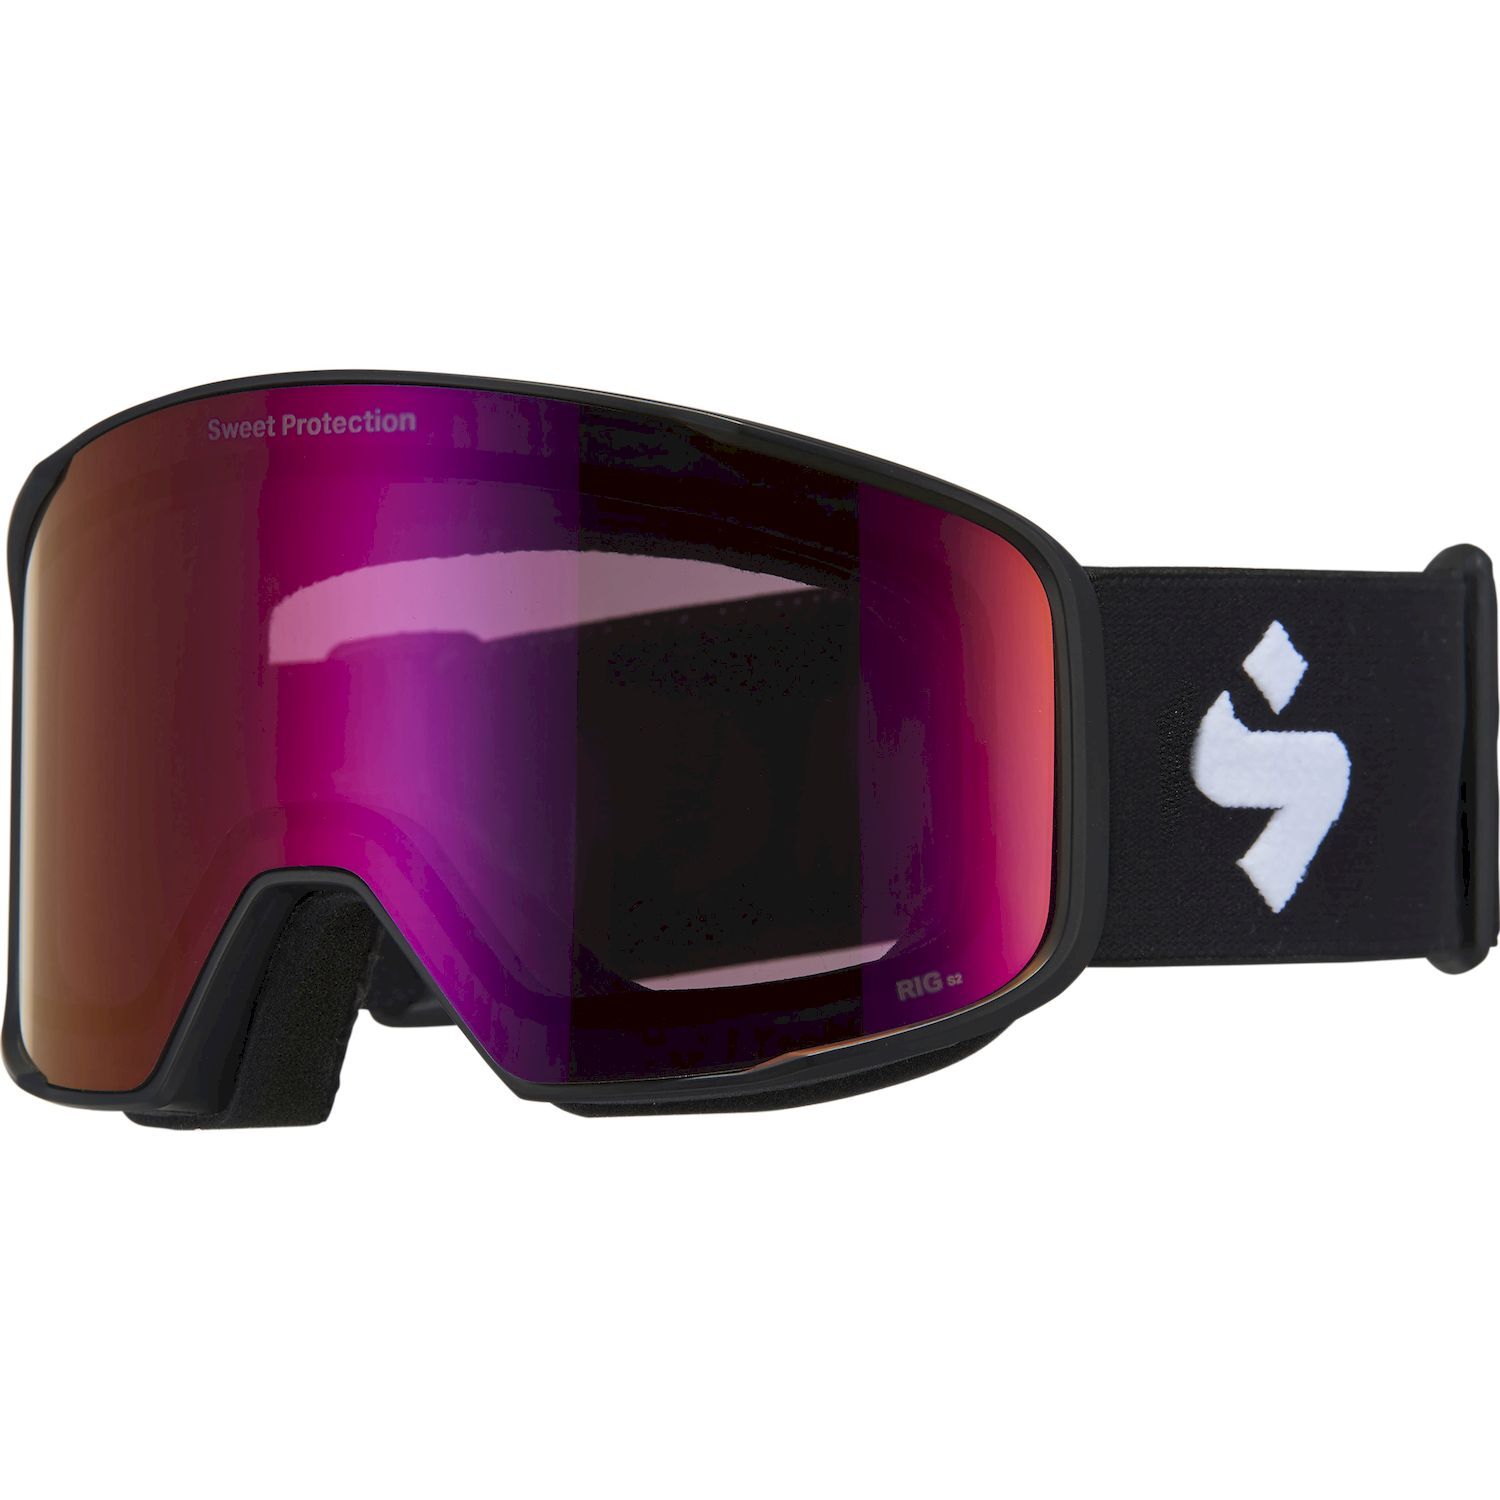 Sweet Protection Boondock RIG Reflect - Ski goggles - Men's